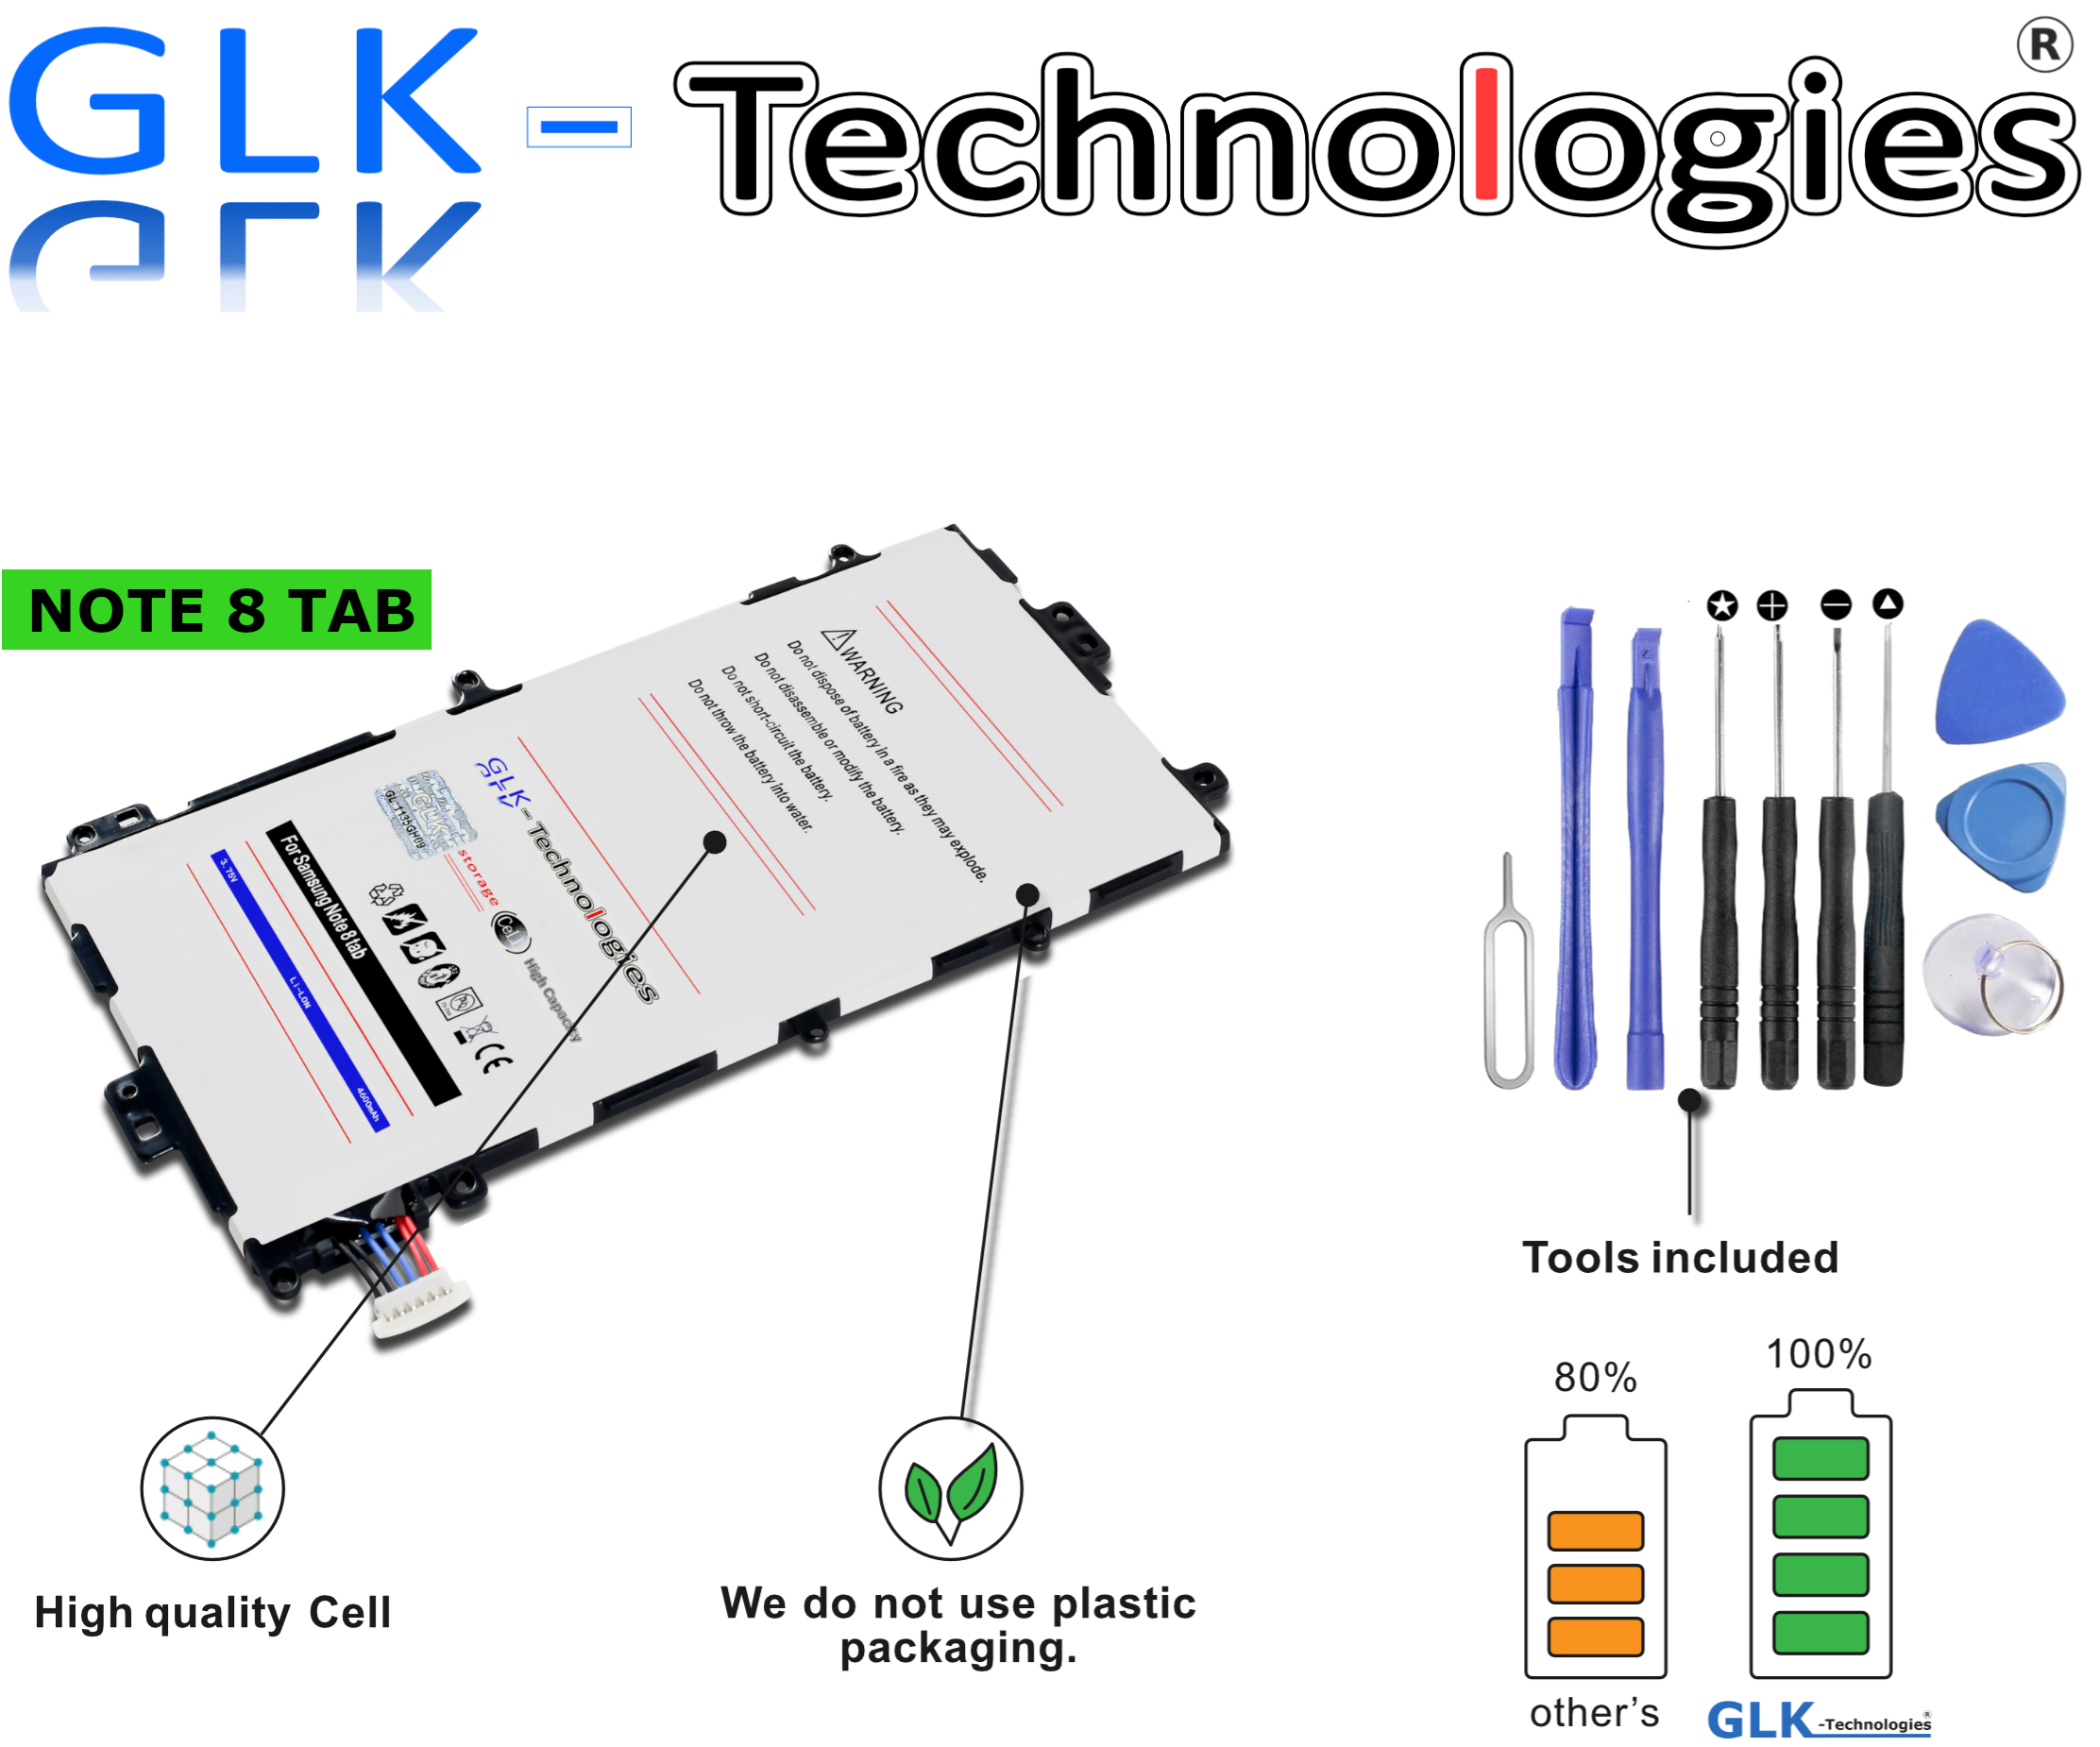 GLK-TECHNOLOGIES Akku Akku N5100 4600mAh 8.0 Note Samsung Werkzeug inkl. 8 SP3770E1H sgh-i467 Li-Ion N5120 N5110 Tablet Ersatz N5110 für